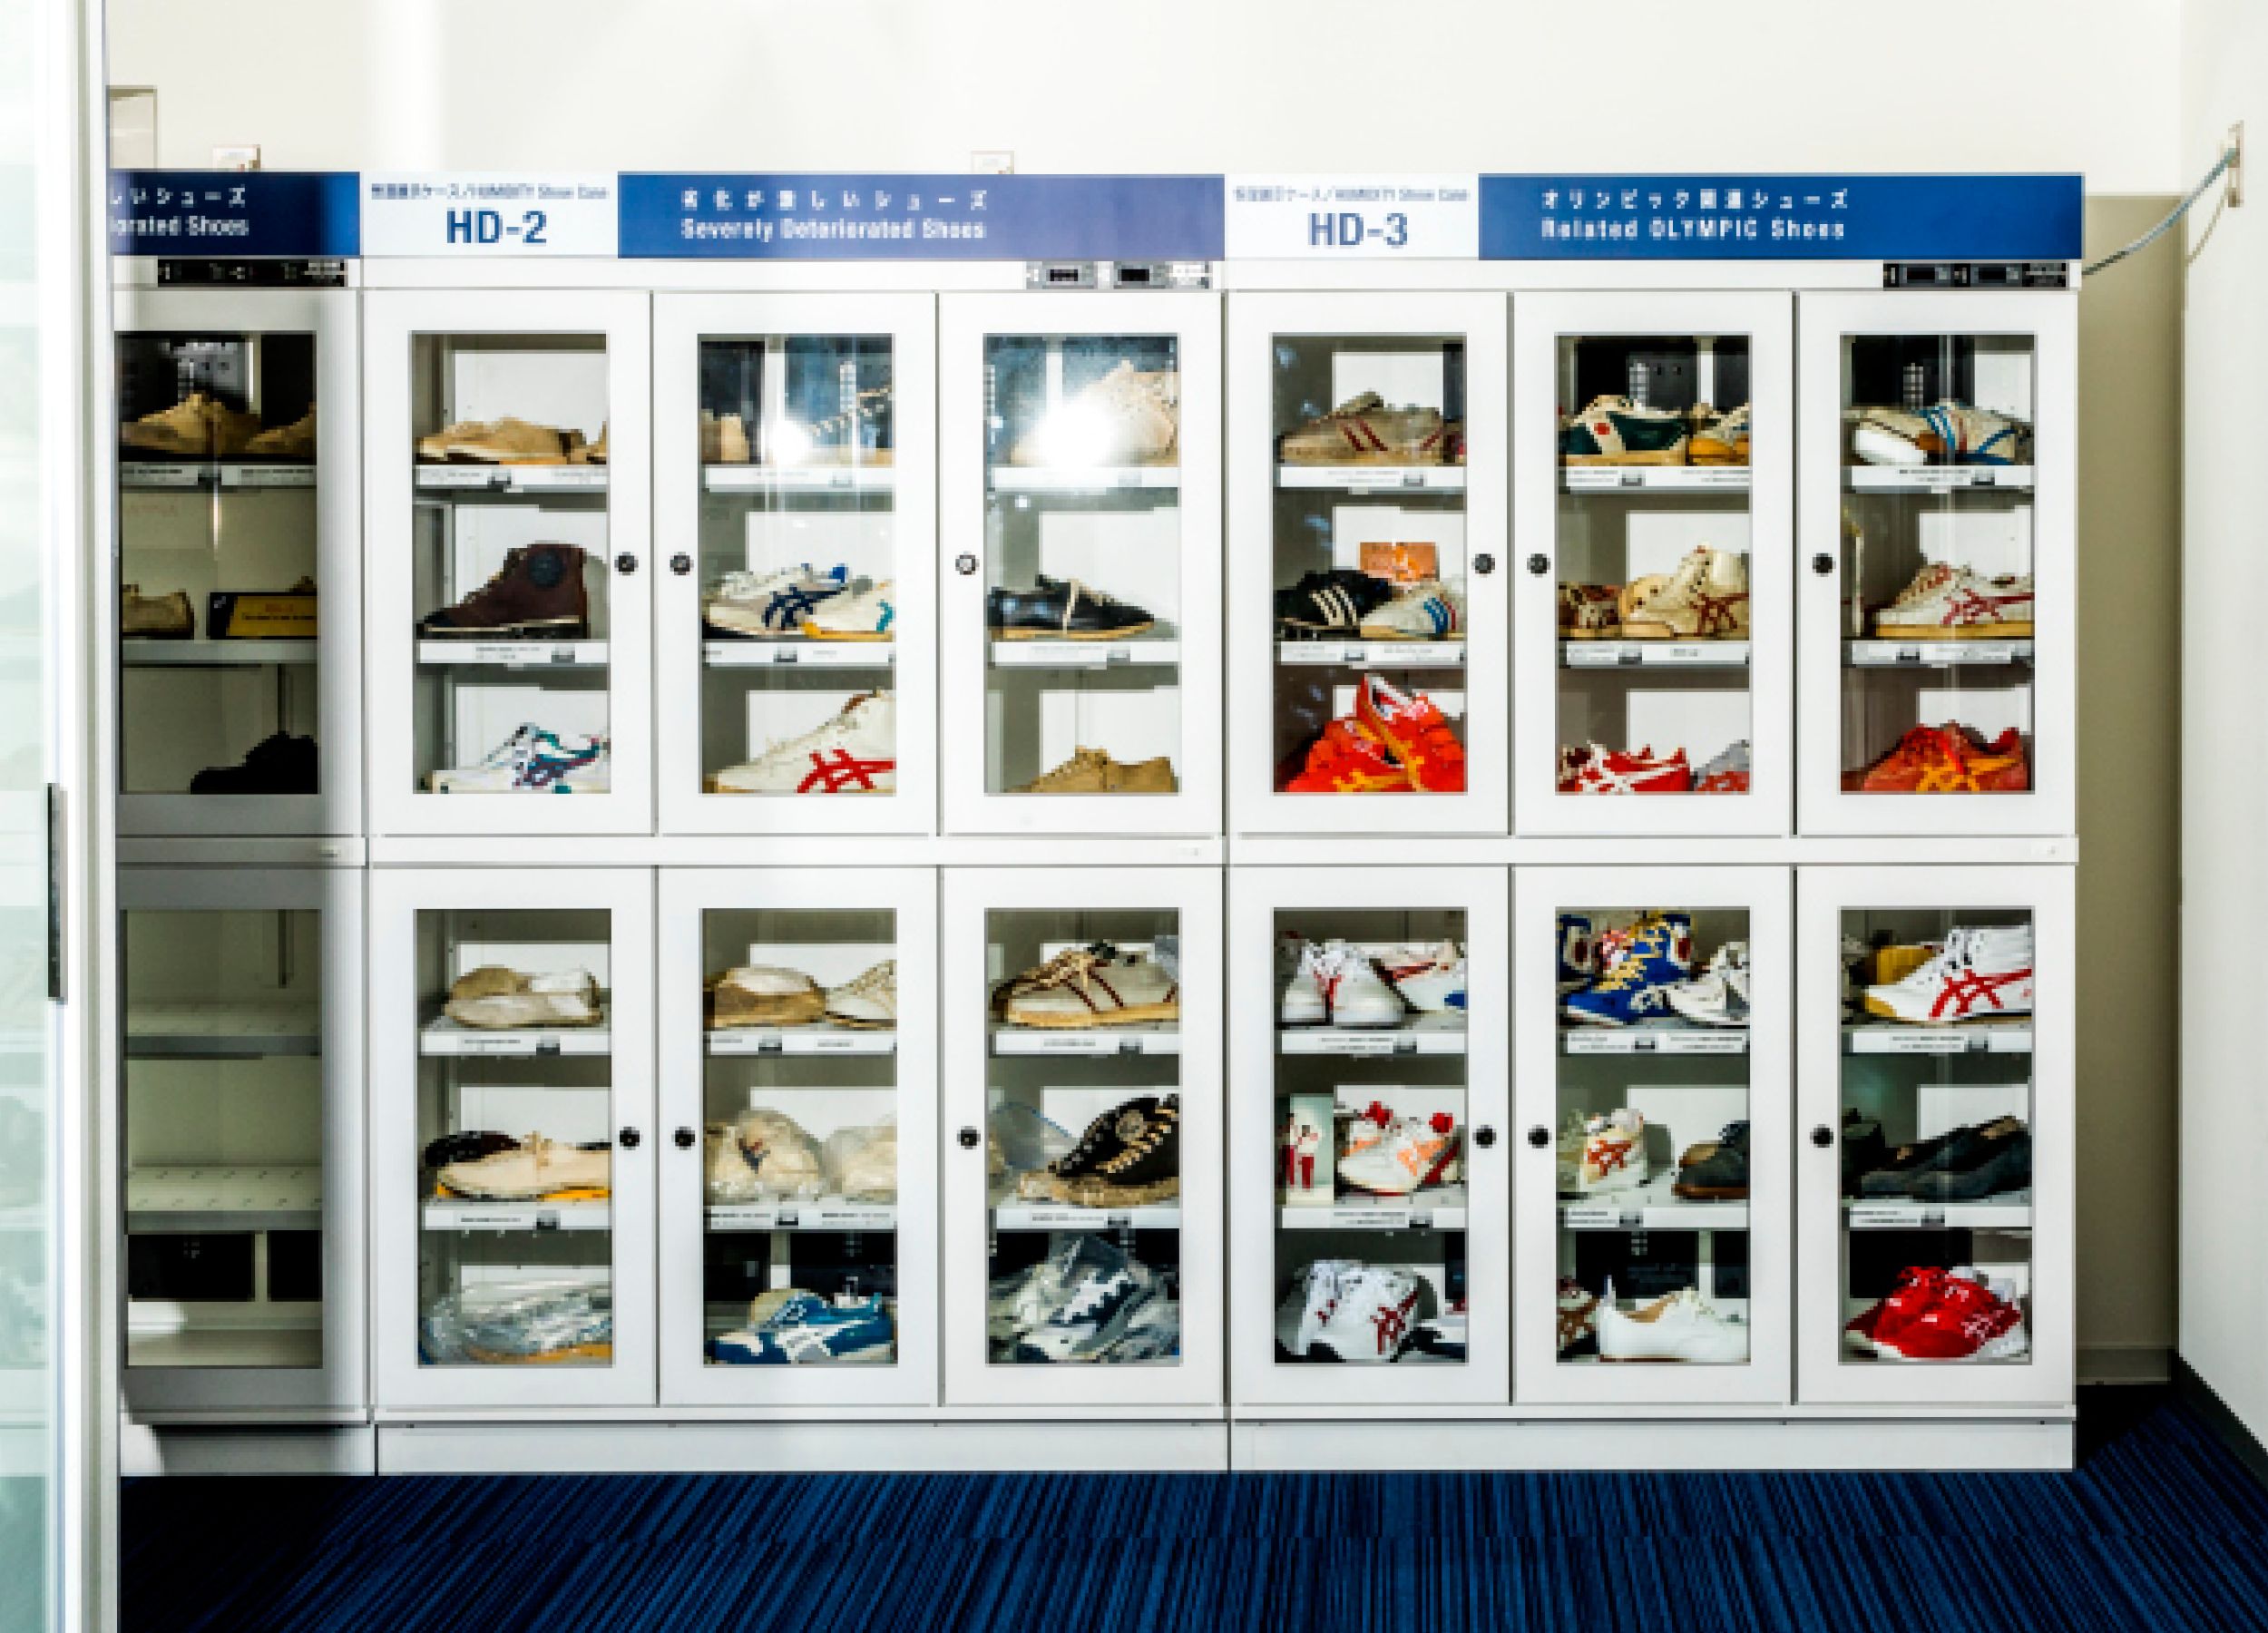 Analyzing John Wall's Collection of Nike Kobe Shoes - Sports